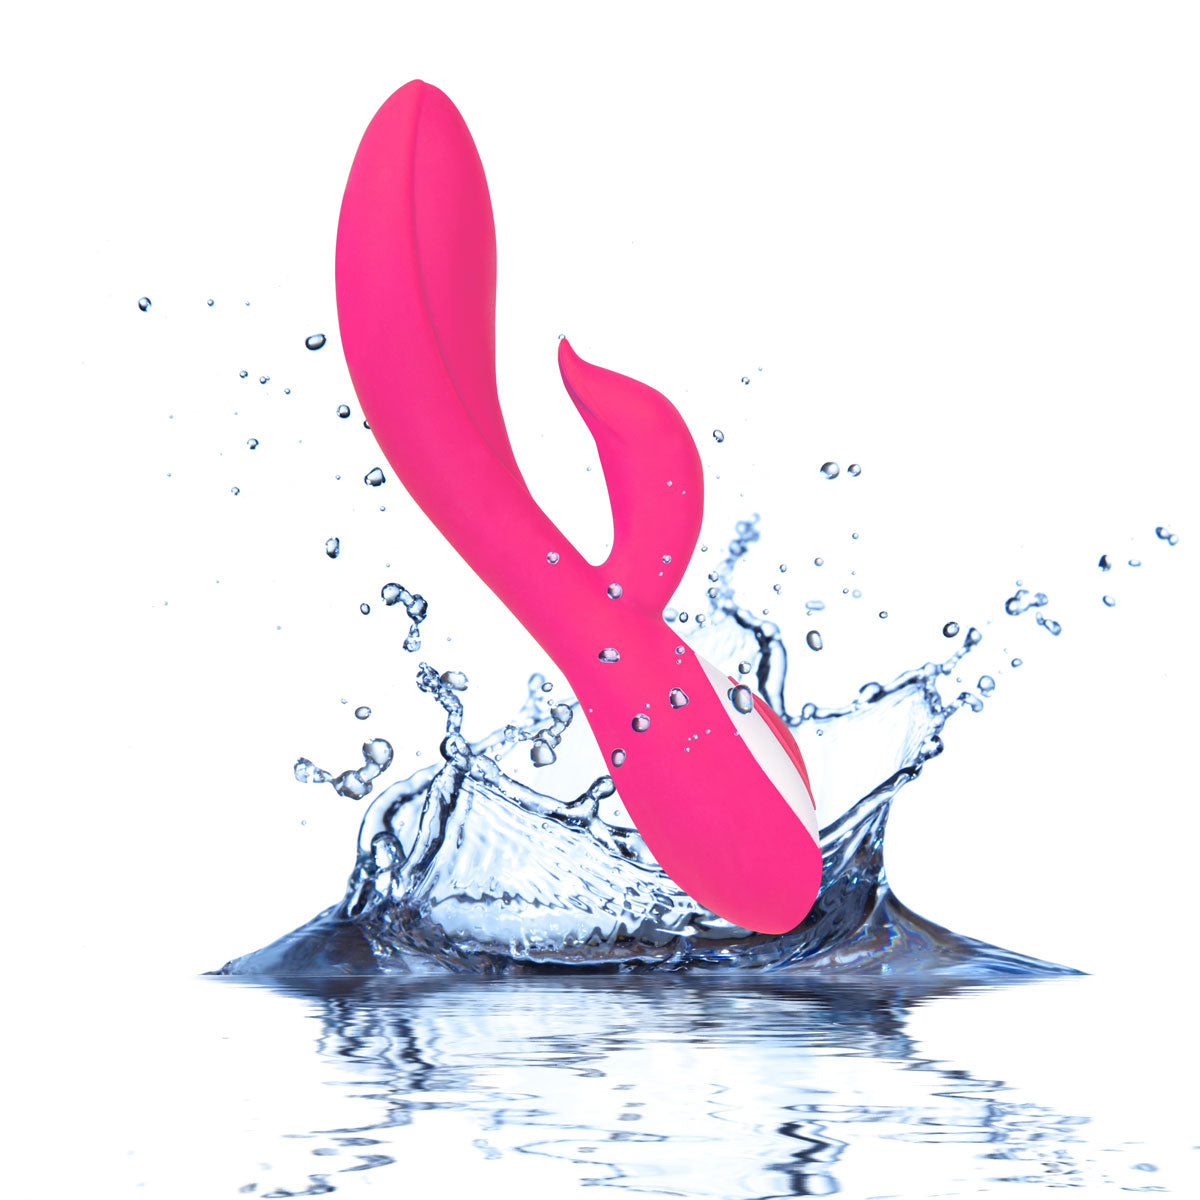 Pure Love® - G-Spot Rabbit-Style Vibrator – Pink